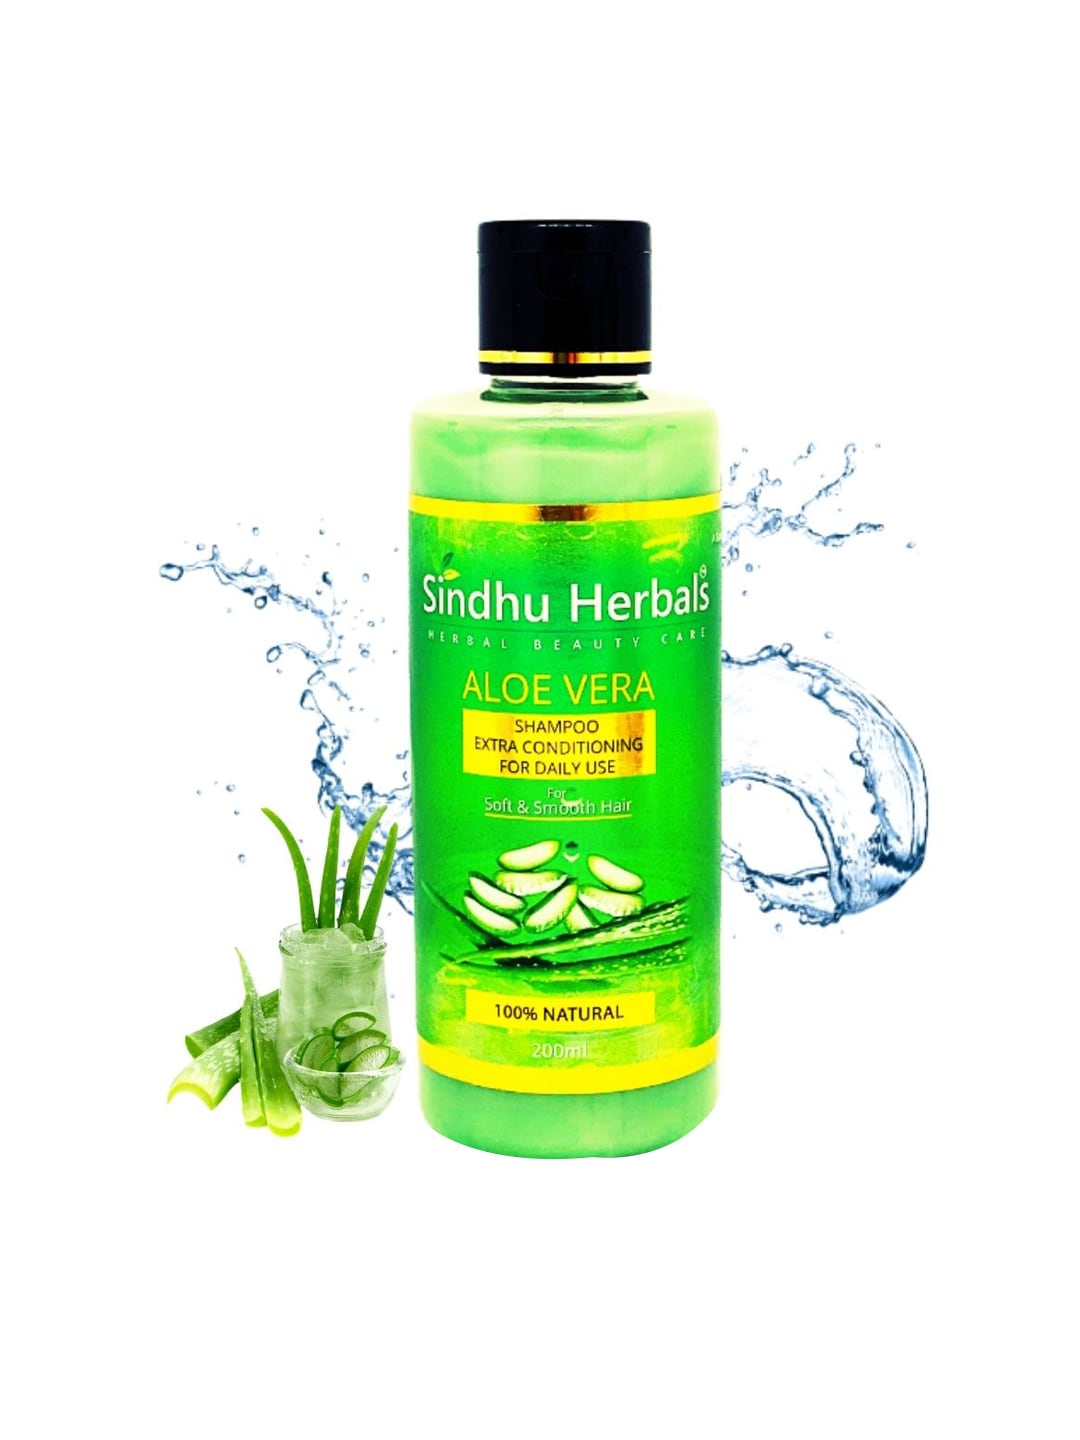 Sindhu Herbals Aloe Vera Shampoo - 200ml Price in India